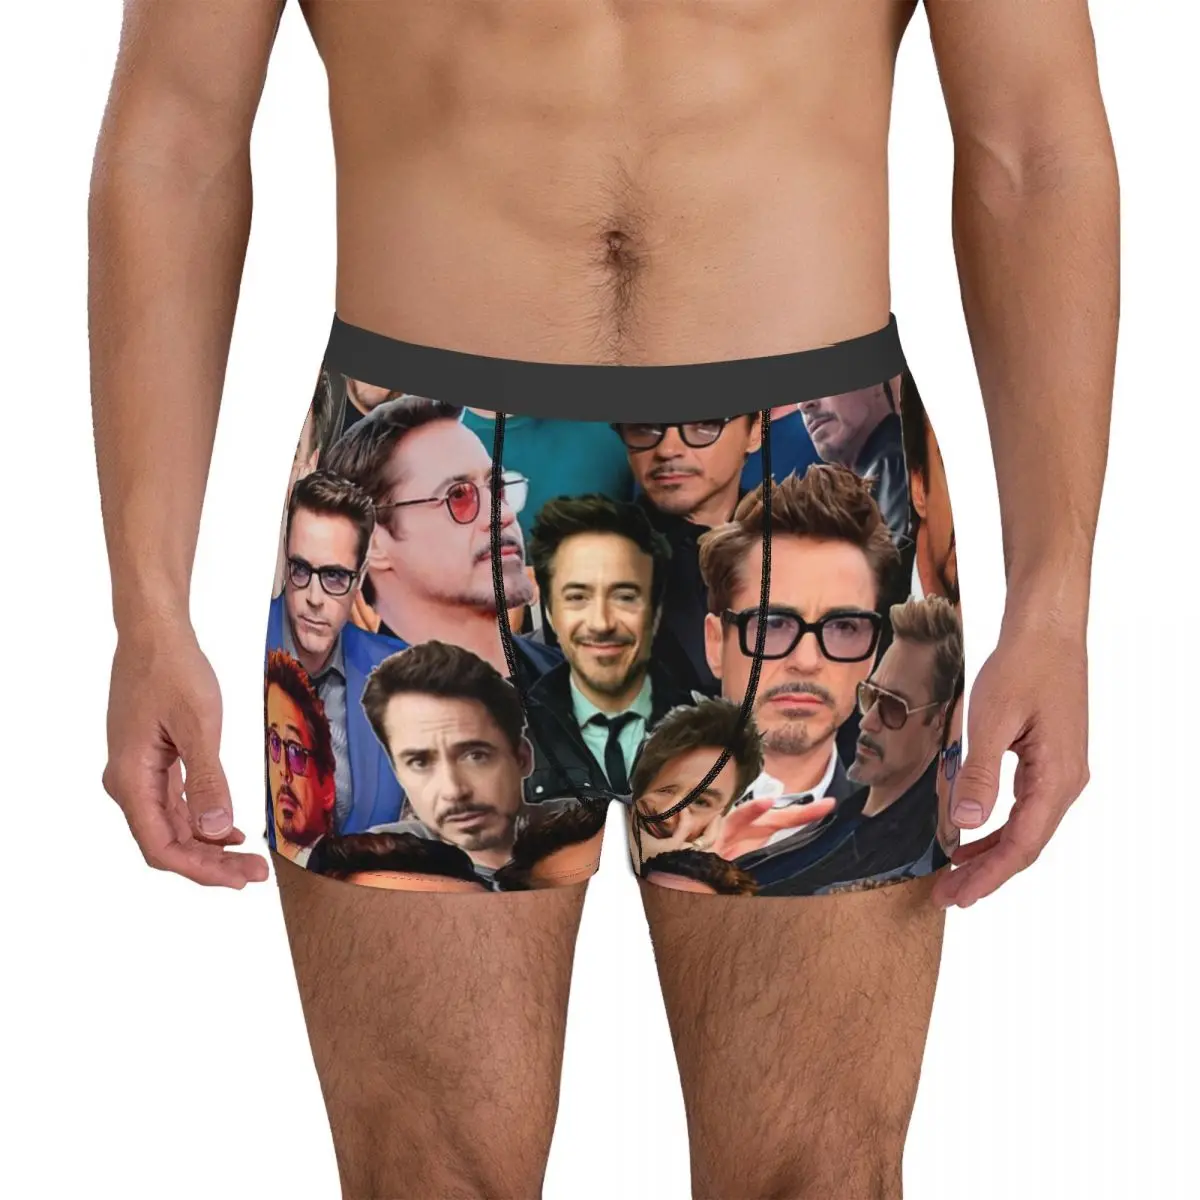 Robert Downey Jr. Photo Collage Underpants Cotton Panties Men's Underwear Ventilate Shorts